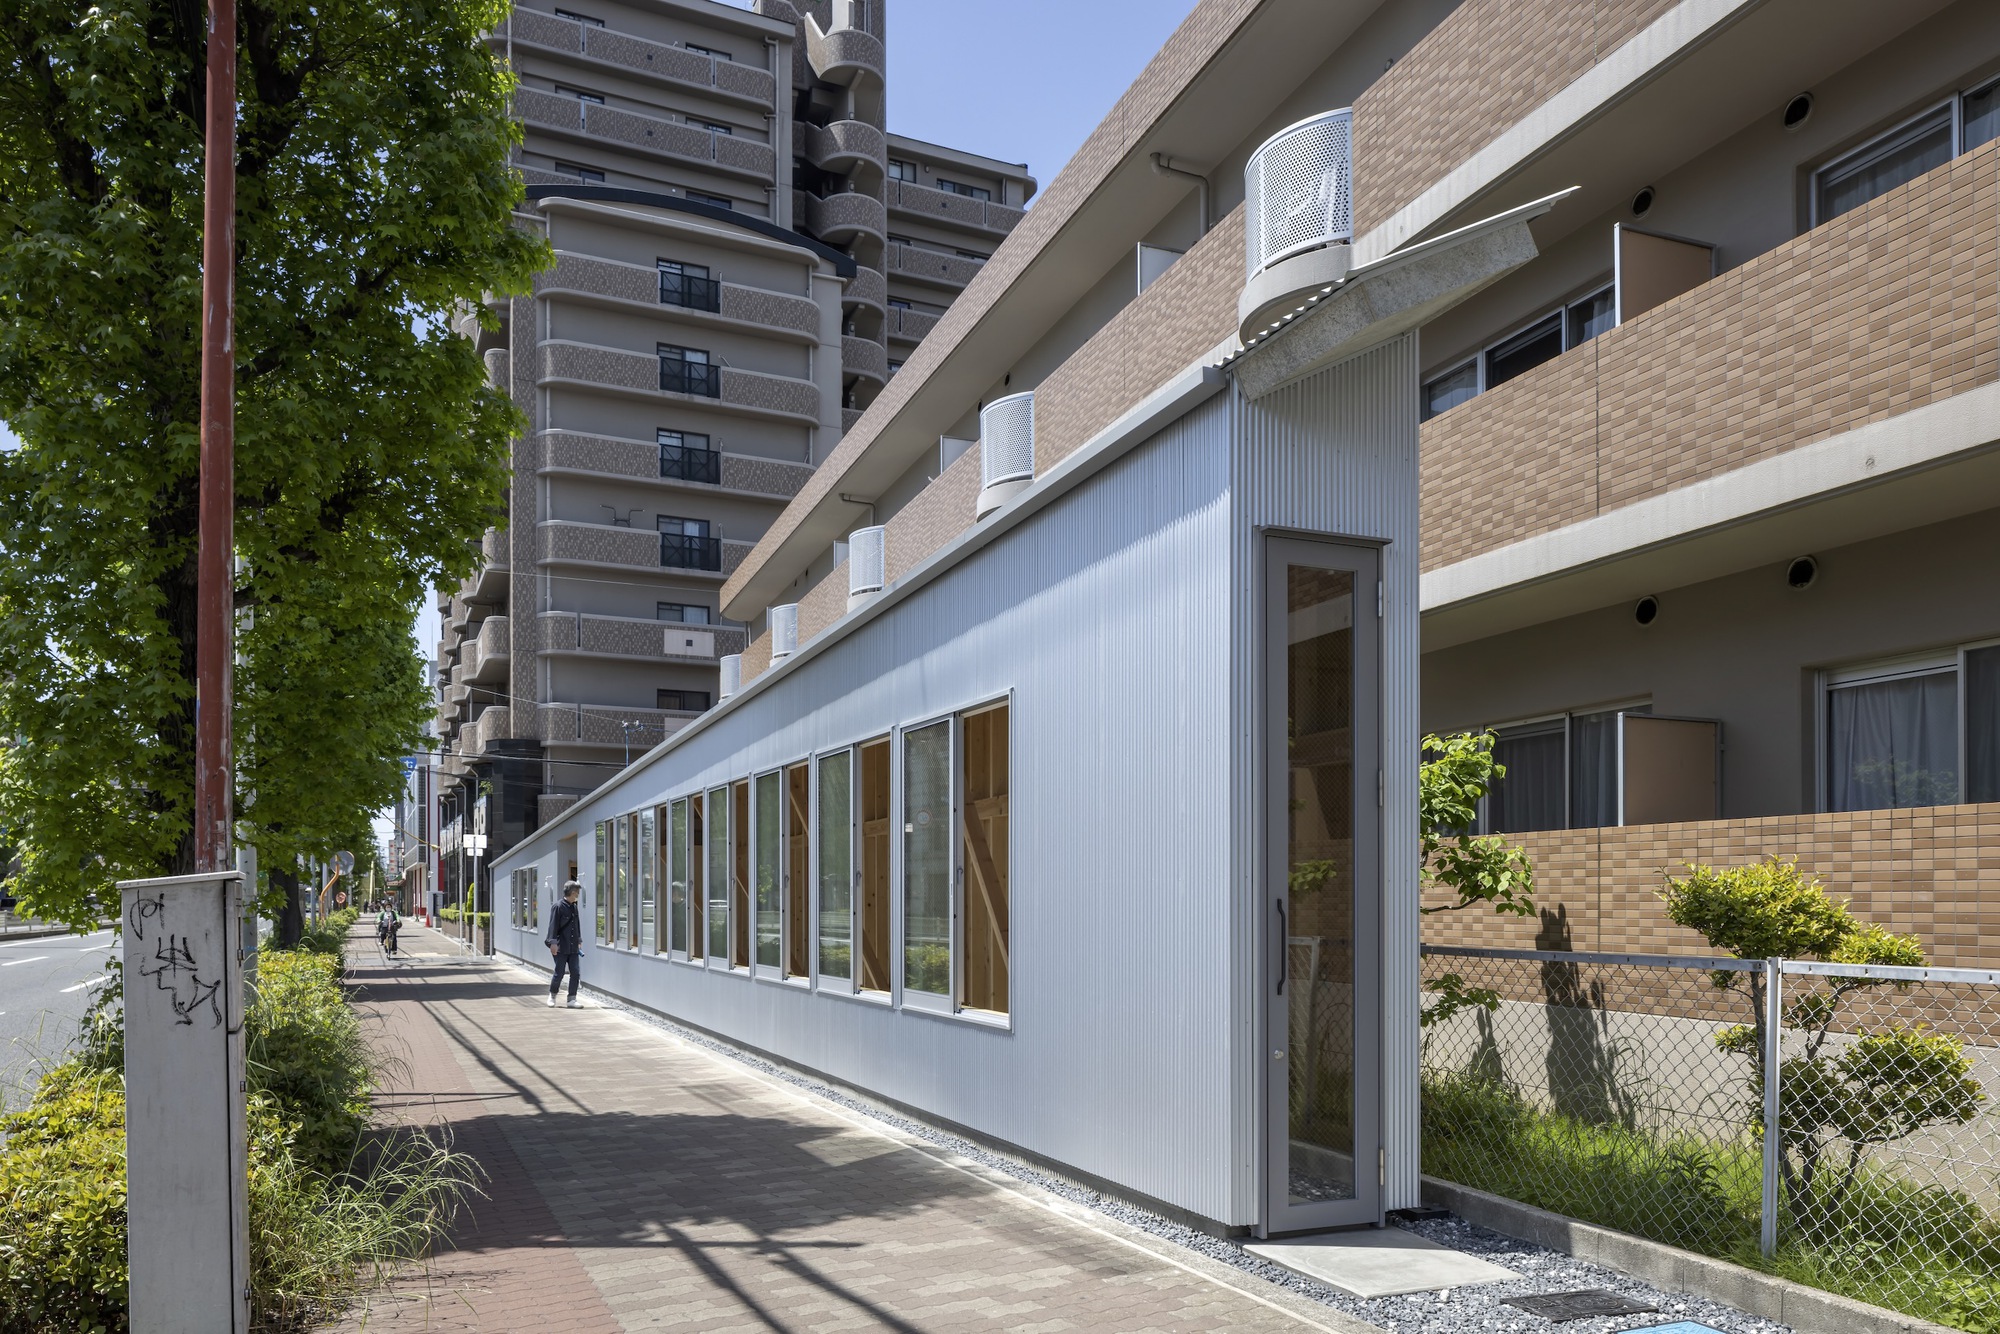 YOKONAGAYA Салон красоты / Офис экологической архитектуры